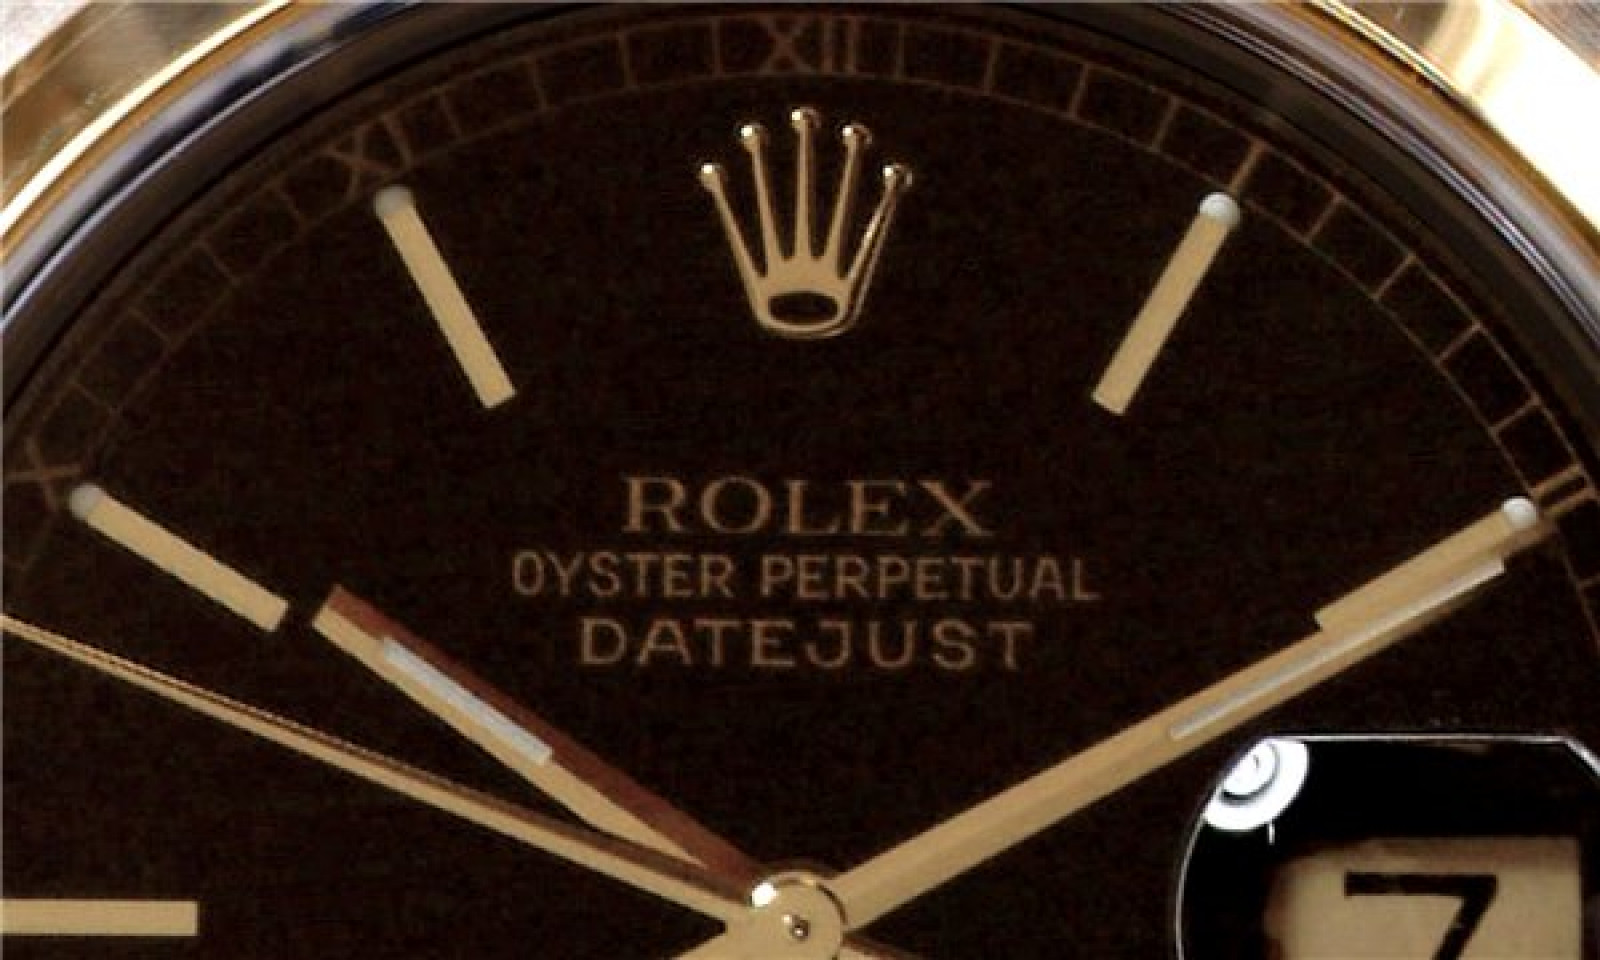 Rolex Datejust 16203 Gold & Steel Black